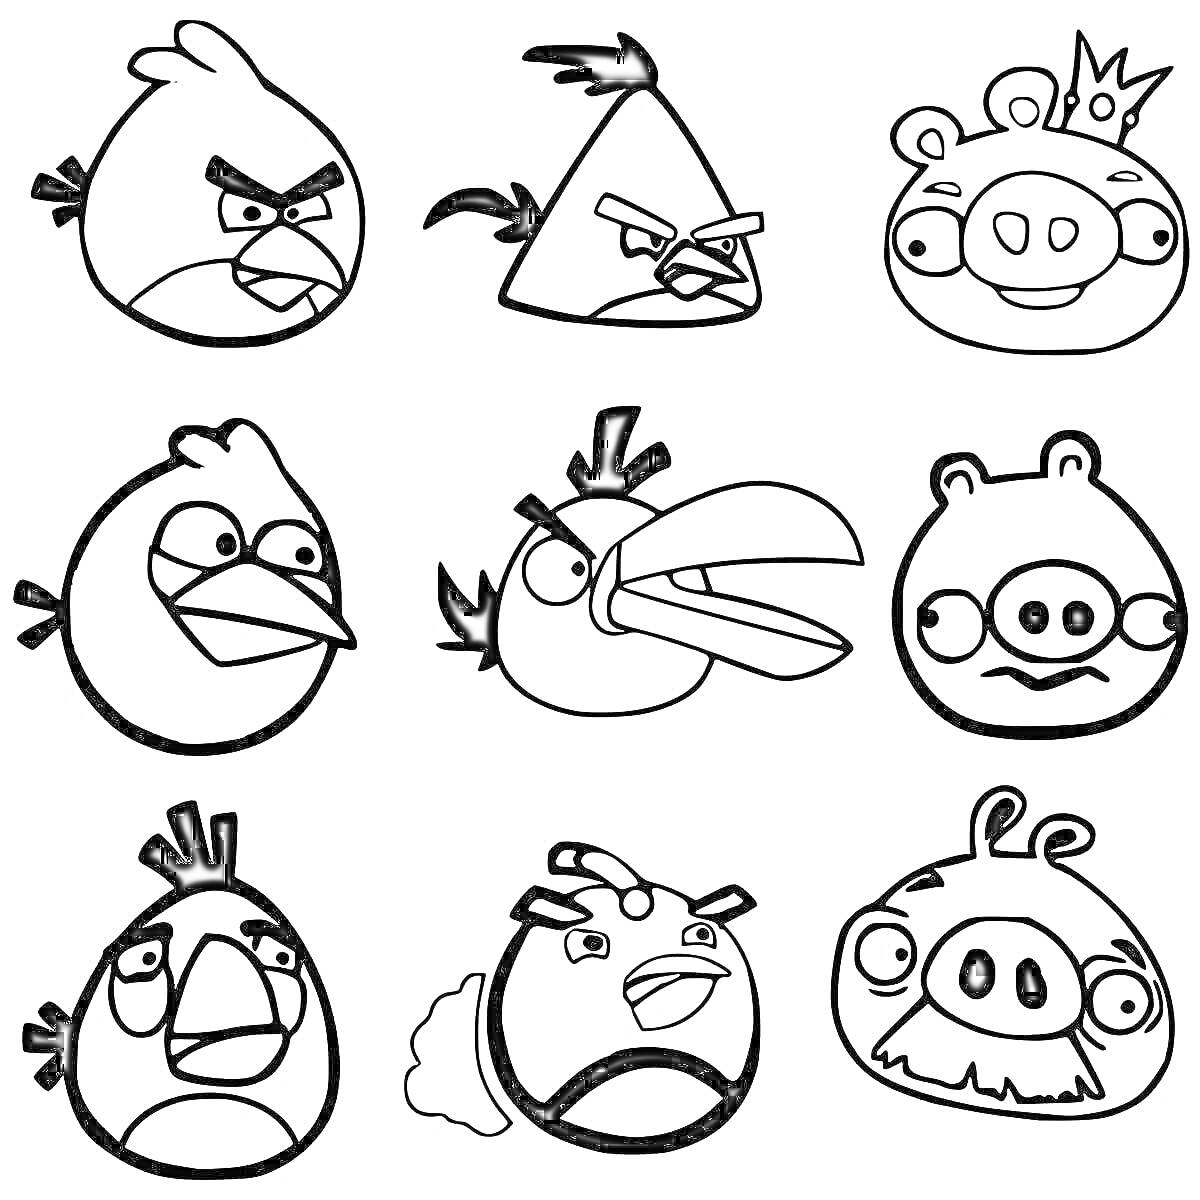 Раскраска Наклейки с персонажами Angry Birds